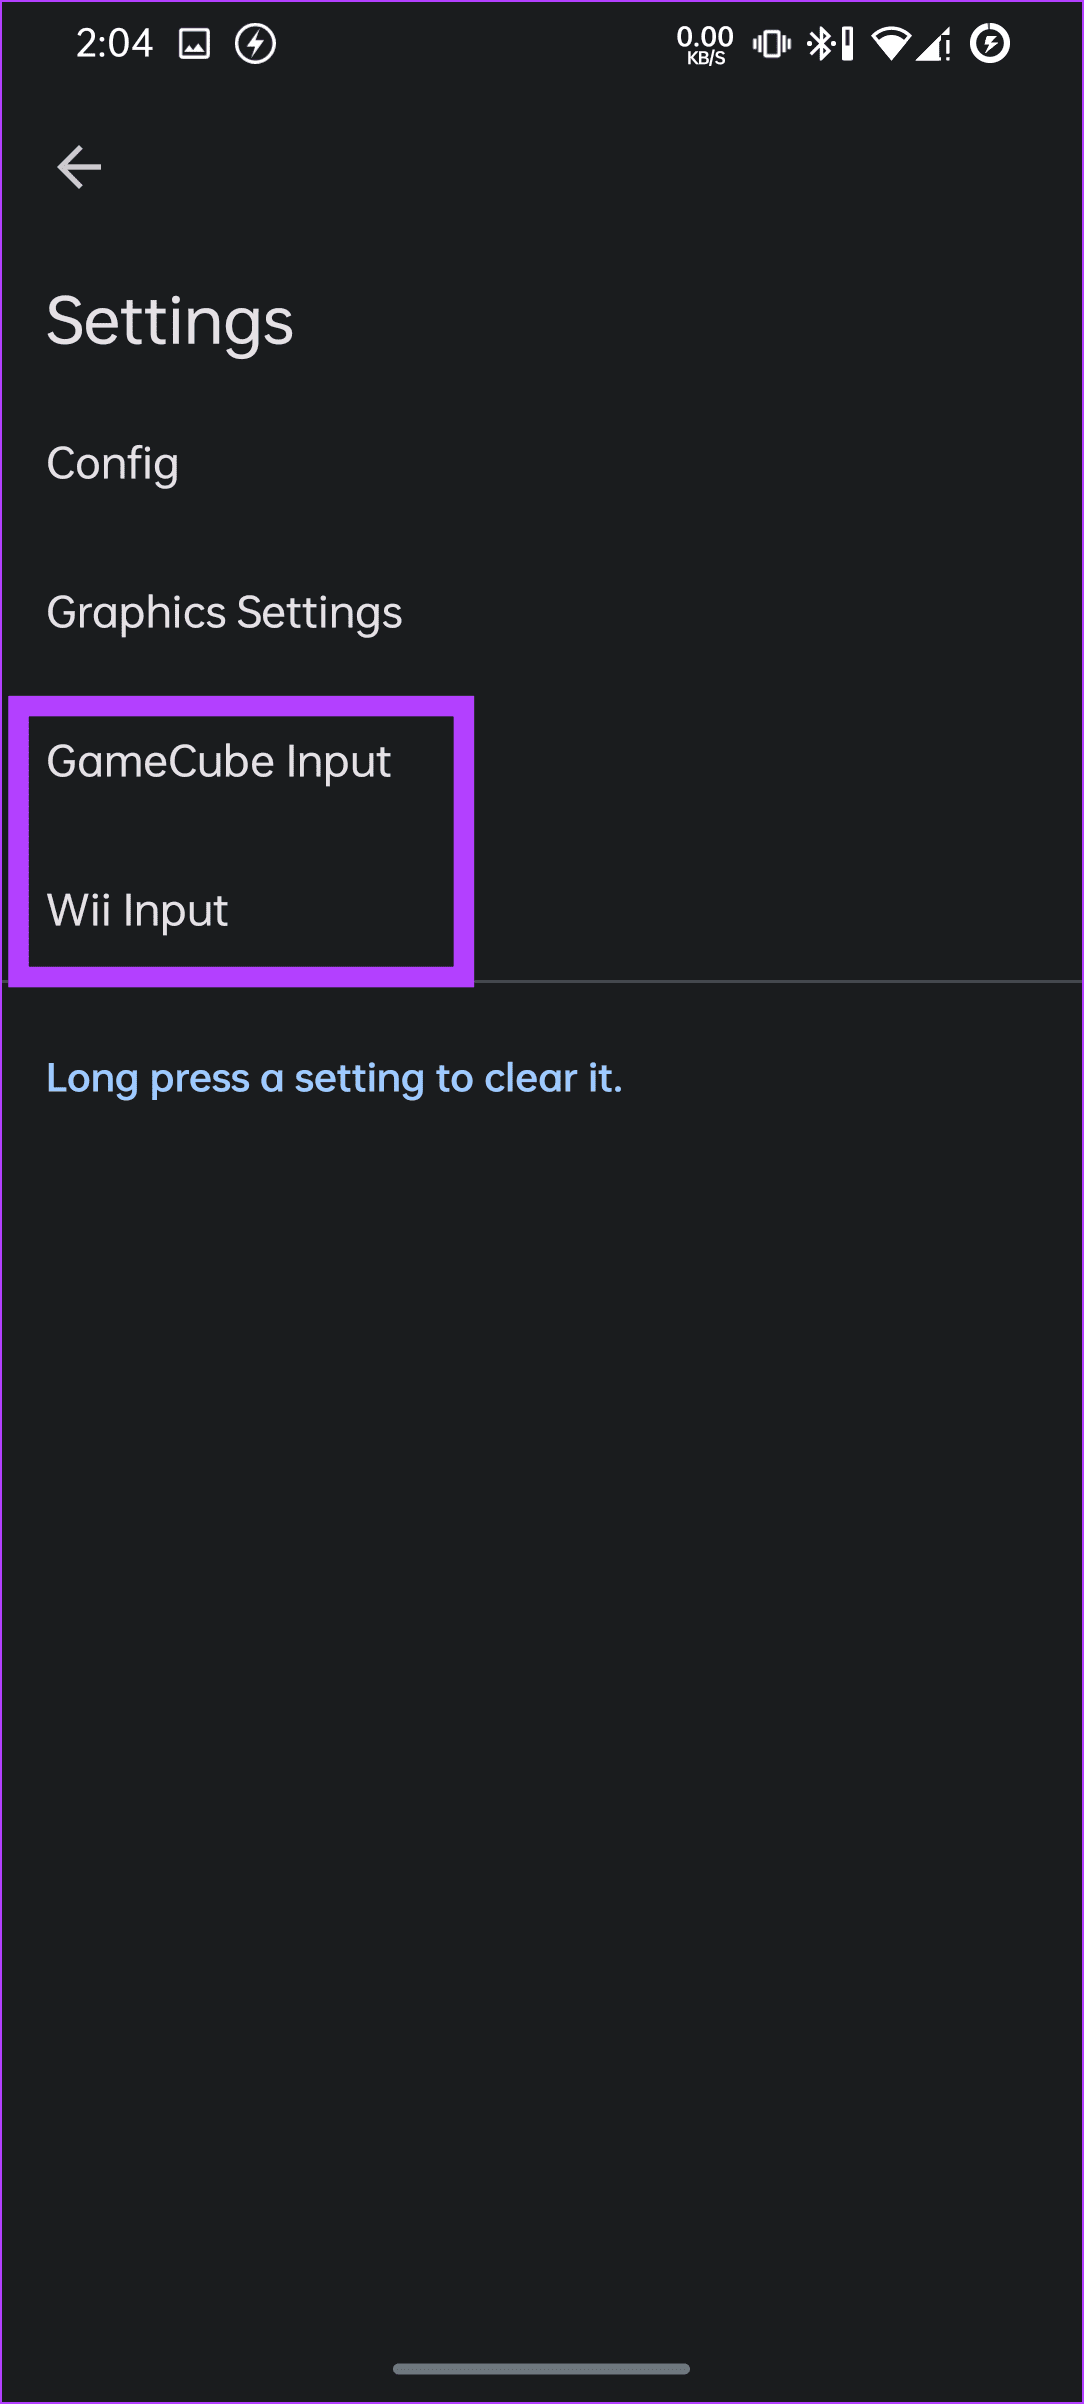 Choose between Gamecube or Wii input